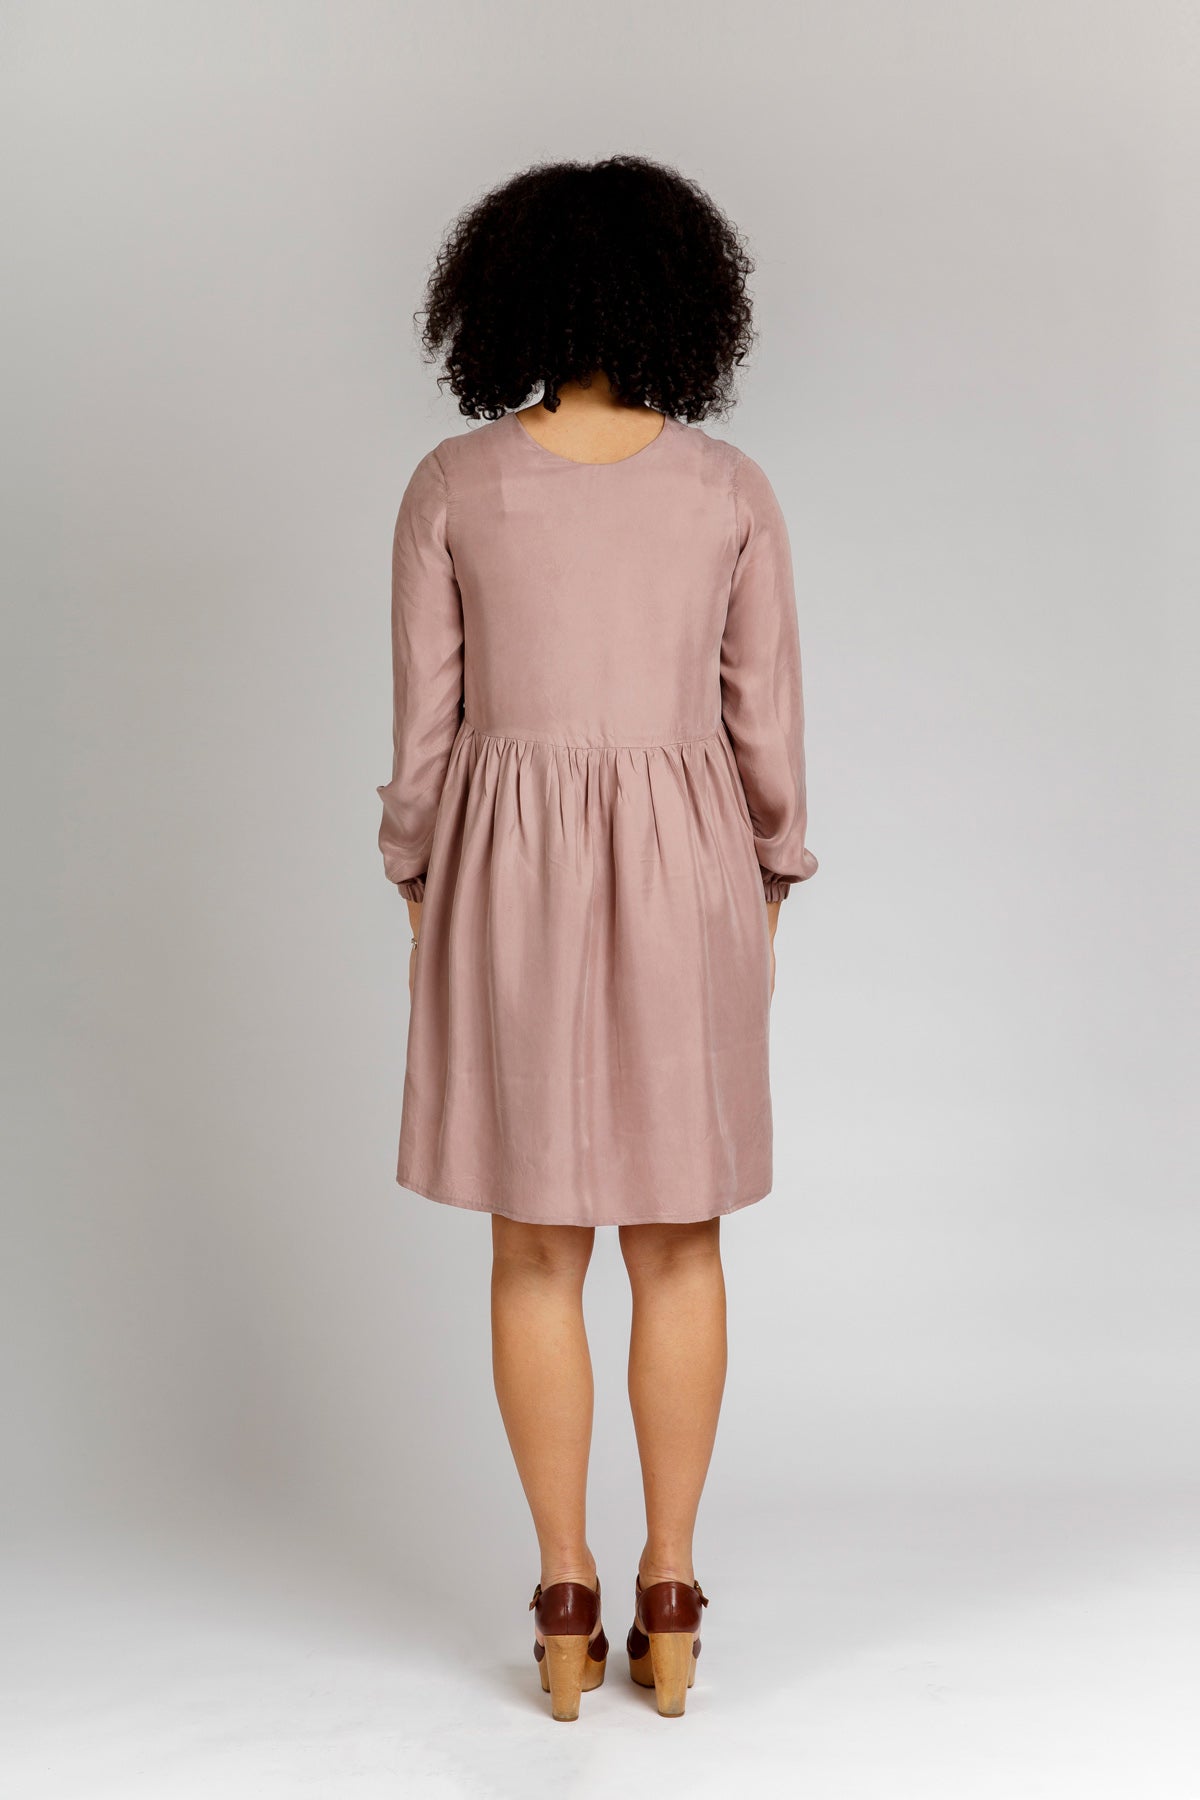 Sudley Dress & Blouse | Megan Nielsen - MaaiDesign